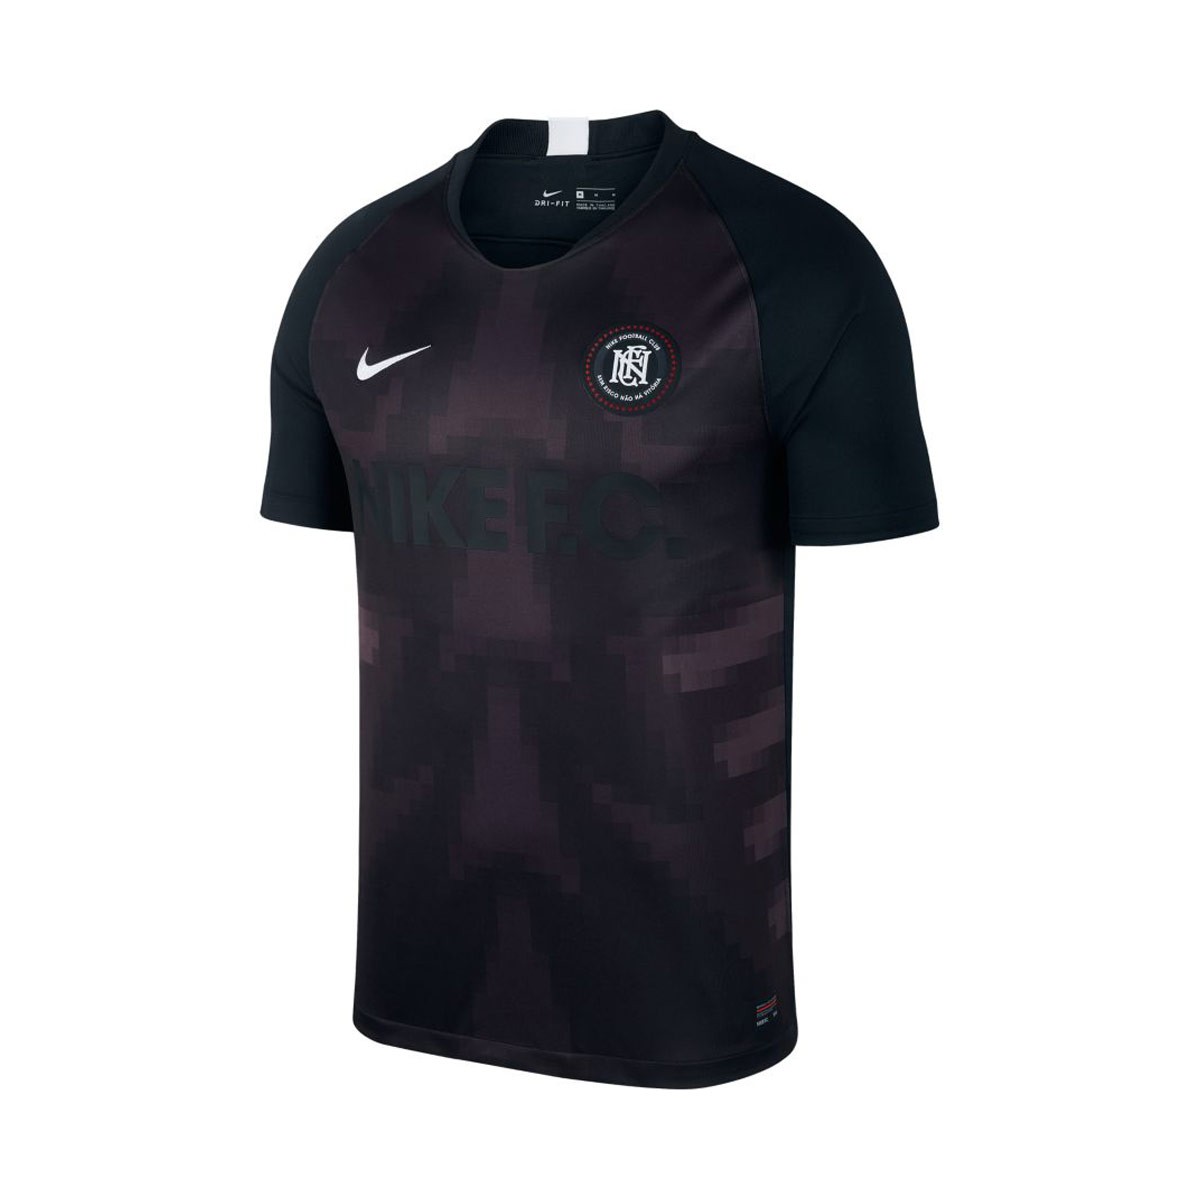 Camiseta Nike NIKE F.C. Black-Oil grey-White - Tienda de fútbol Fútbol  Emotion